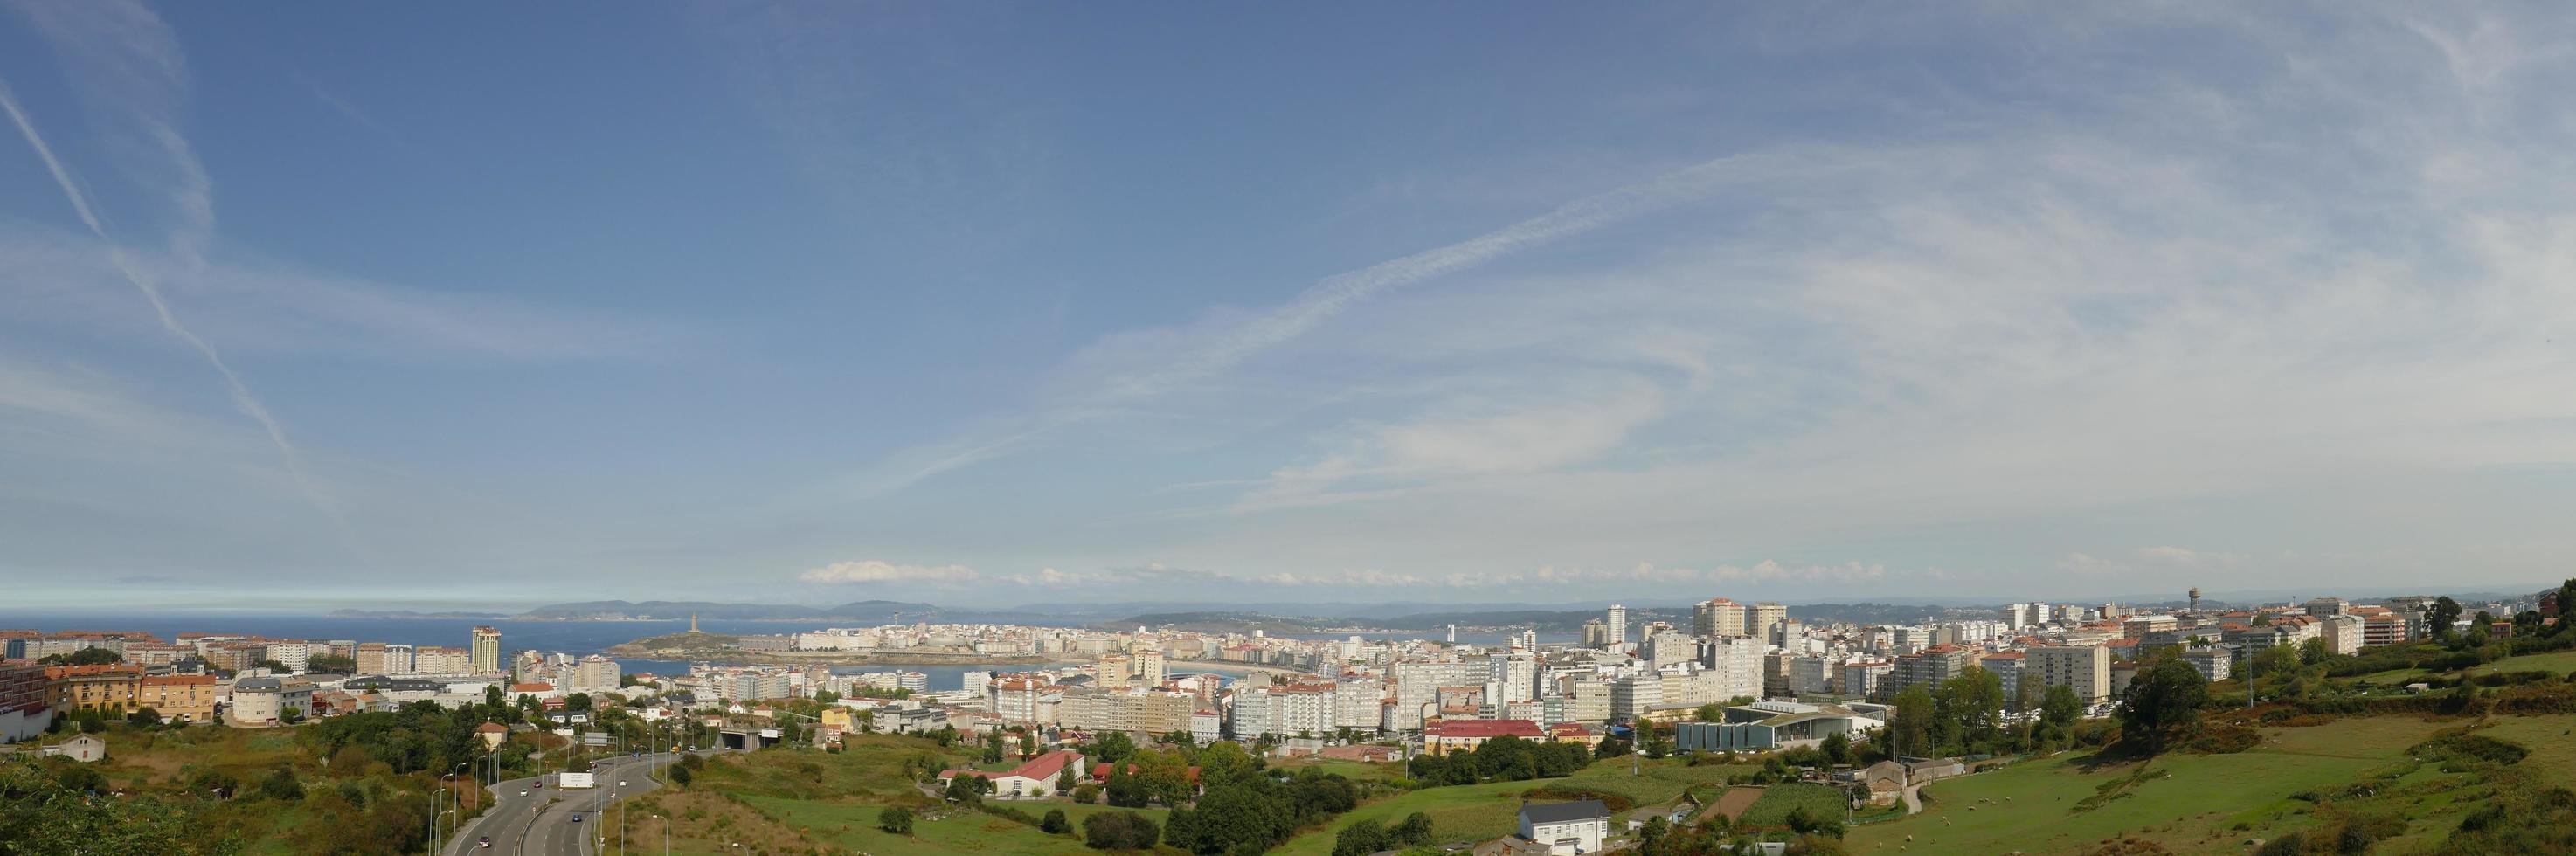 Panoramablick auf eine Corunha foto